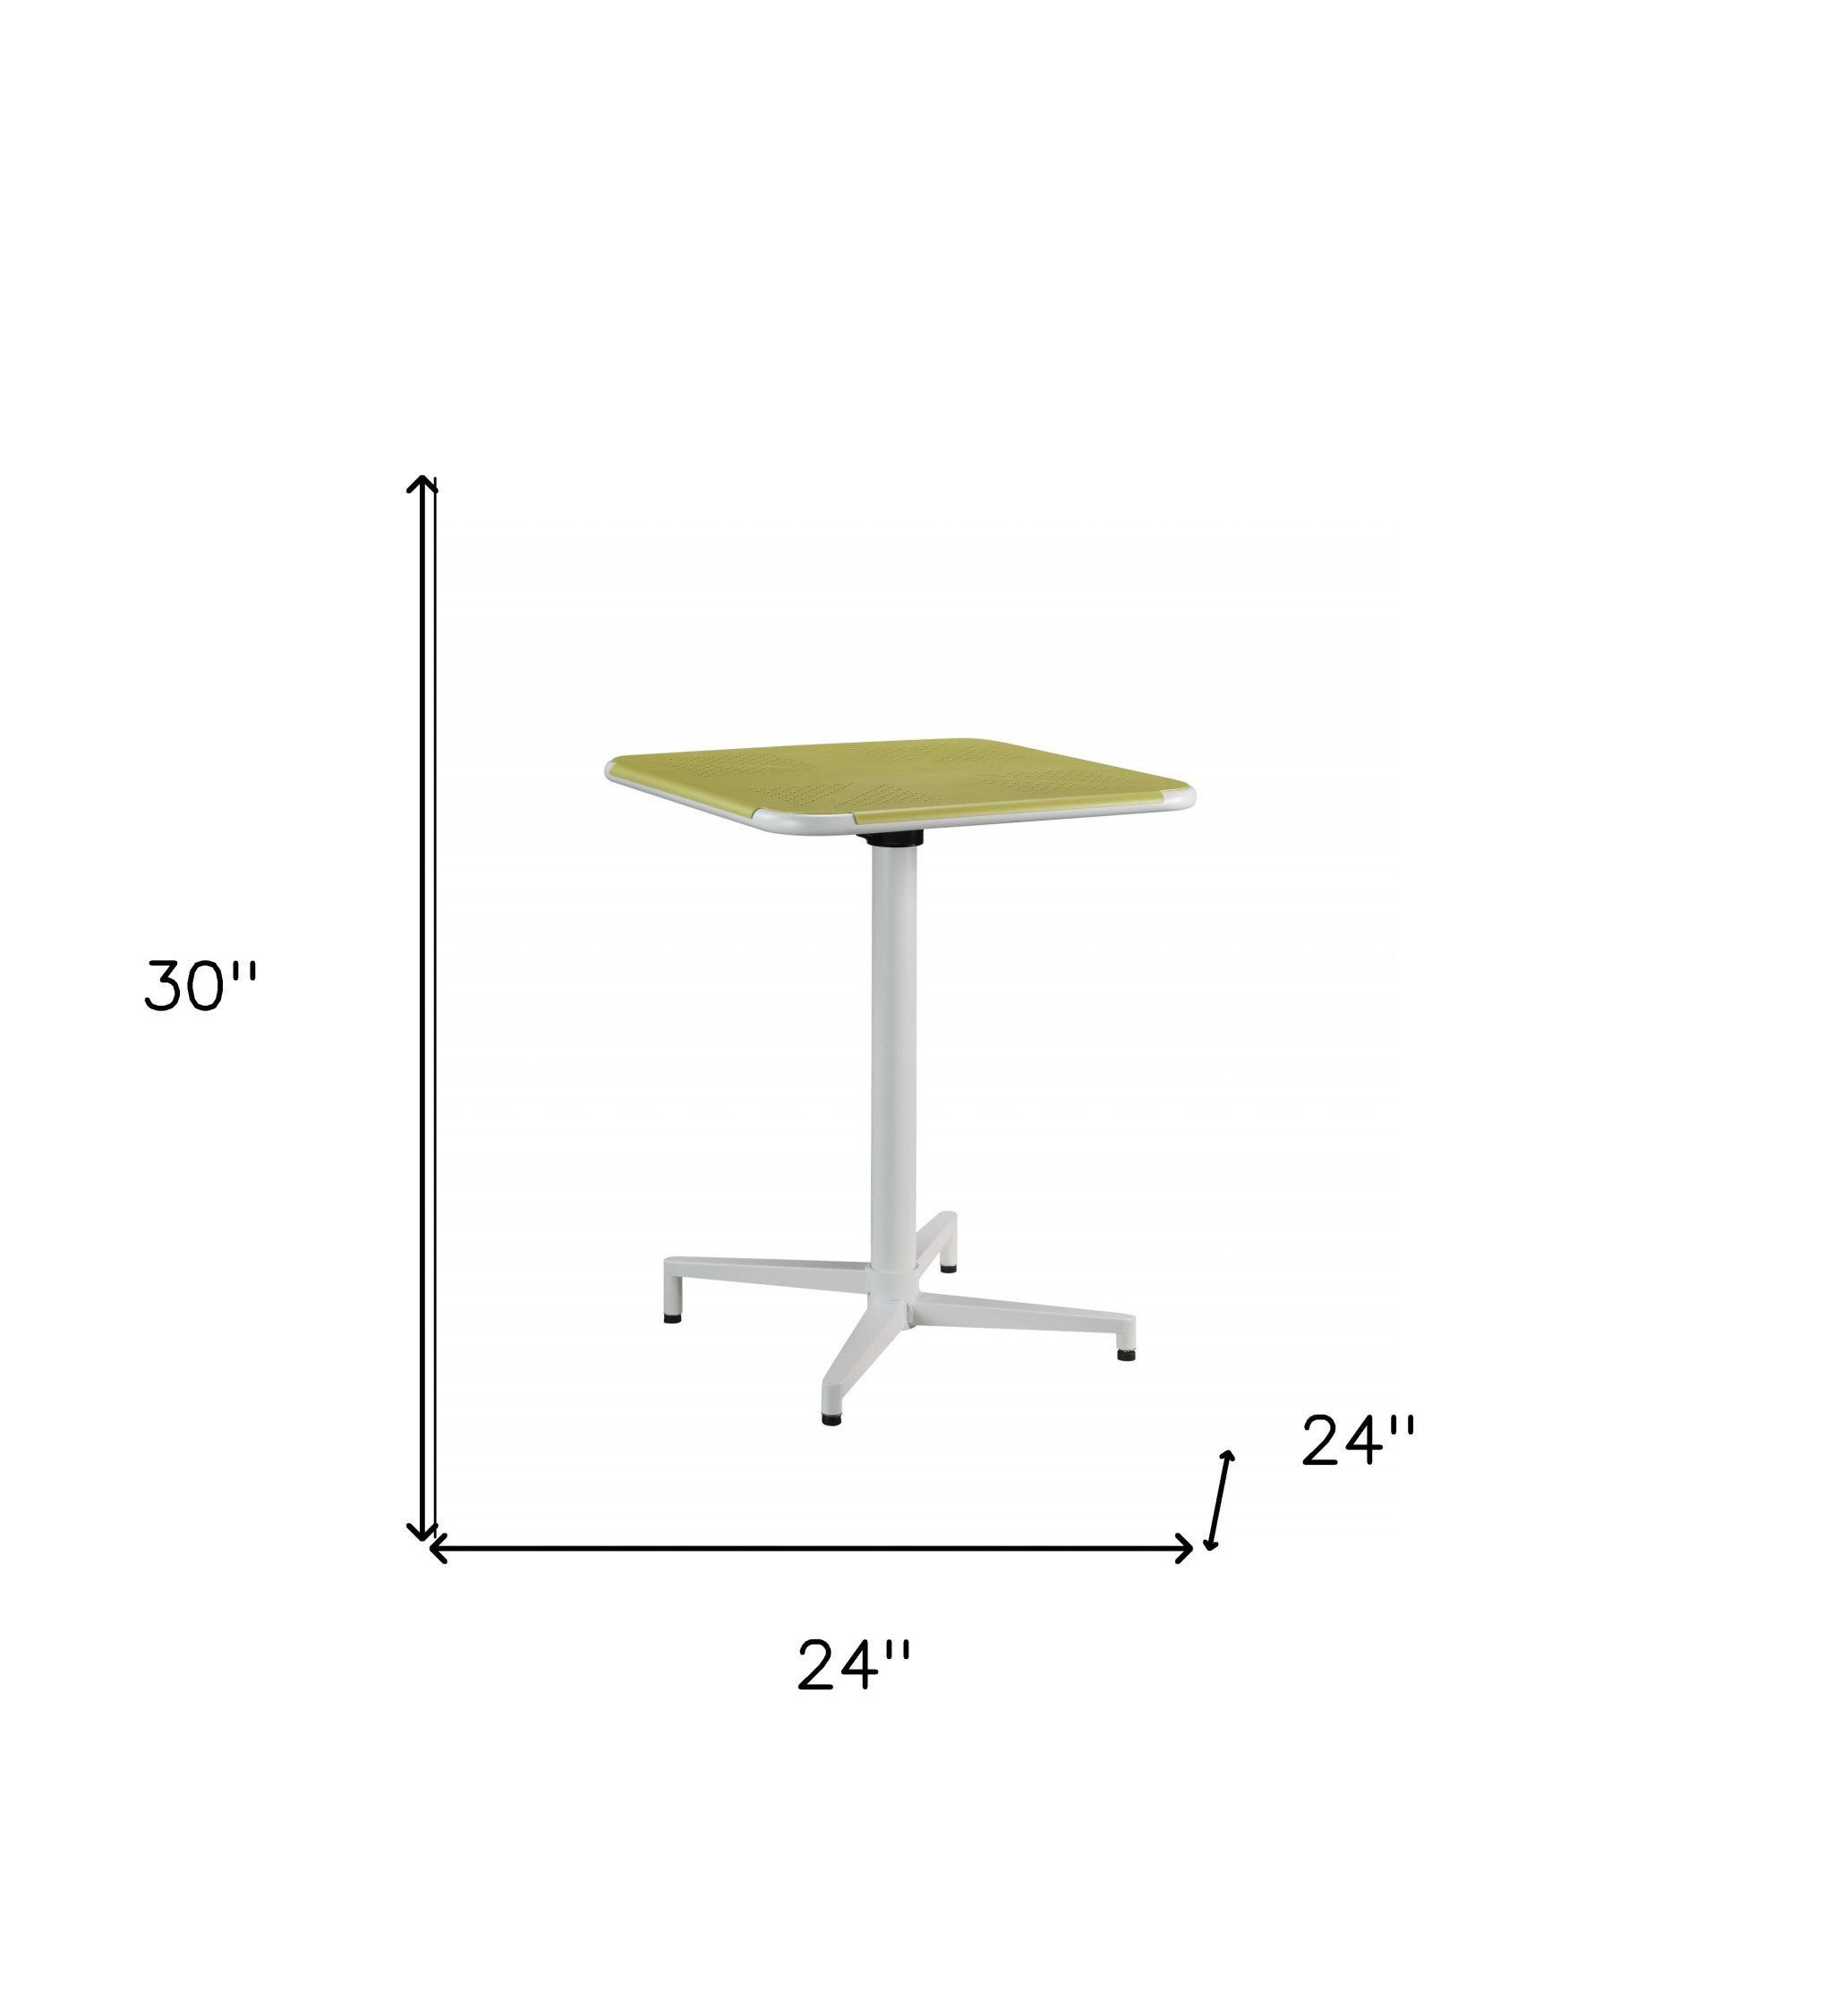 24" X 24" X 30" Yellow White Metal Folding Table